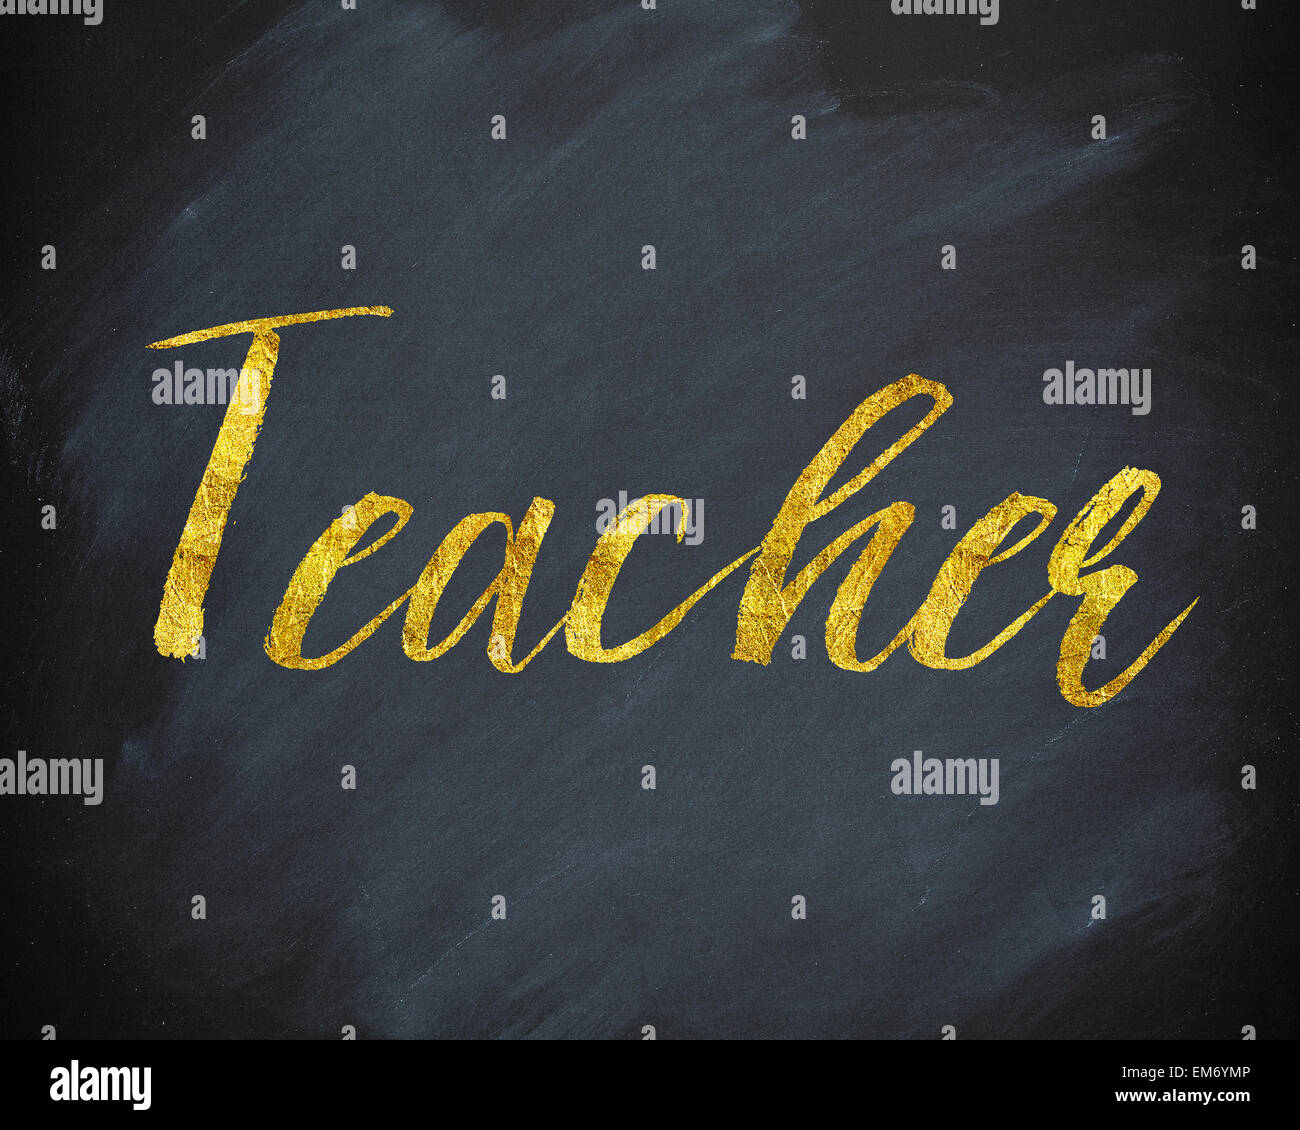 Lehrer Gold Faux Folie Metallic Glitter zitieren isoliert auf schwarze Tafel Stockfoto